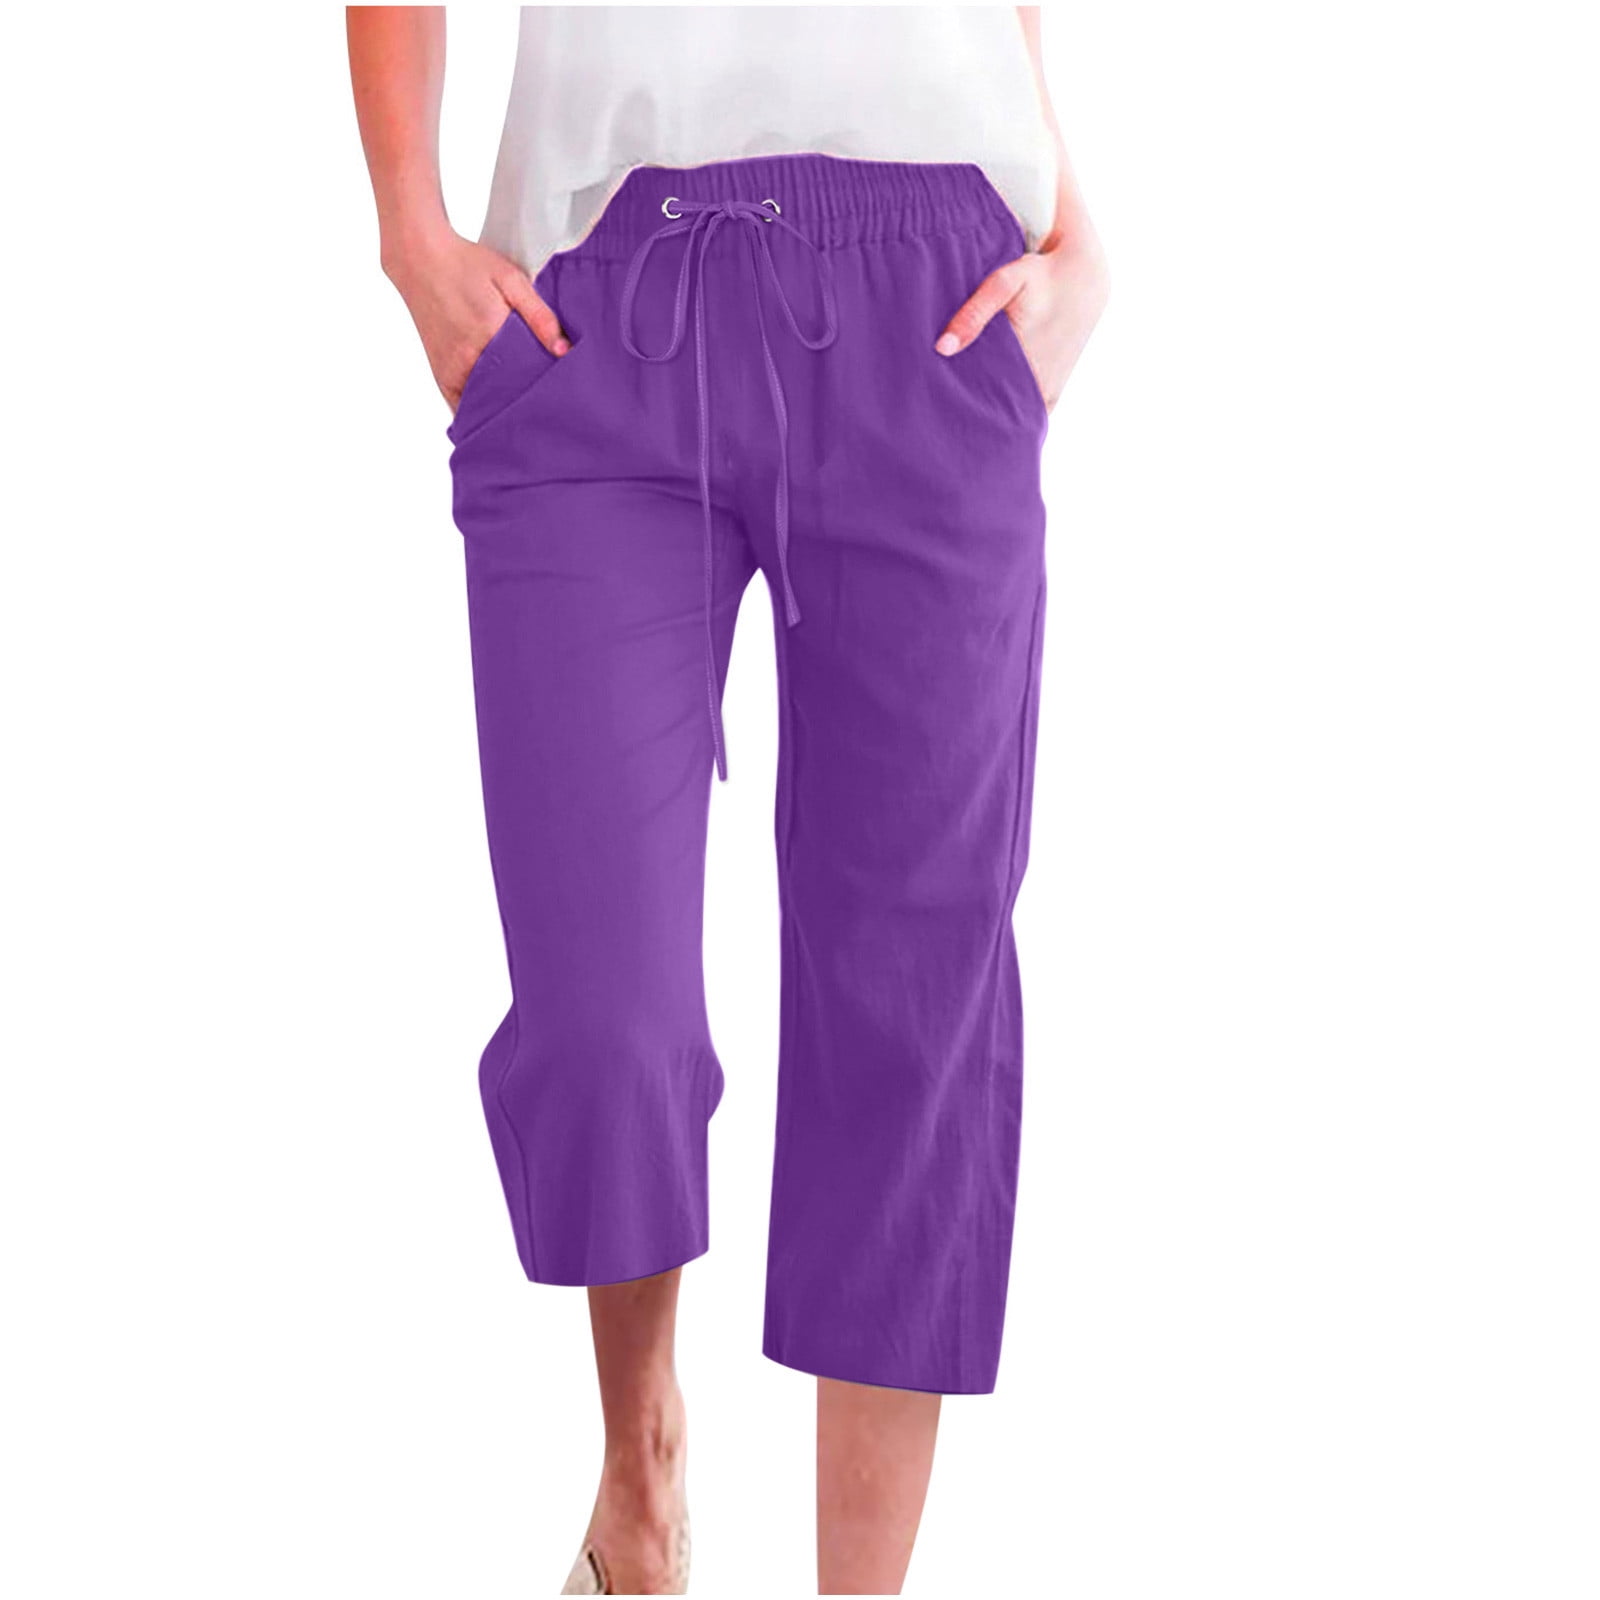 Linen Pants Women Summer Casual Solid Color Elastic Loose